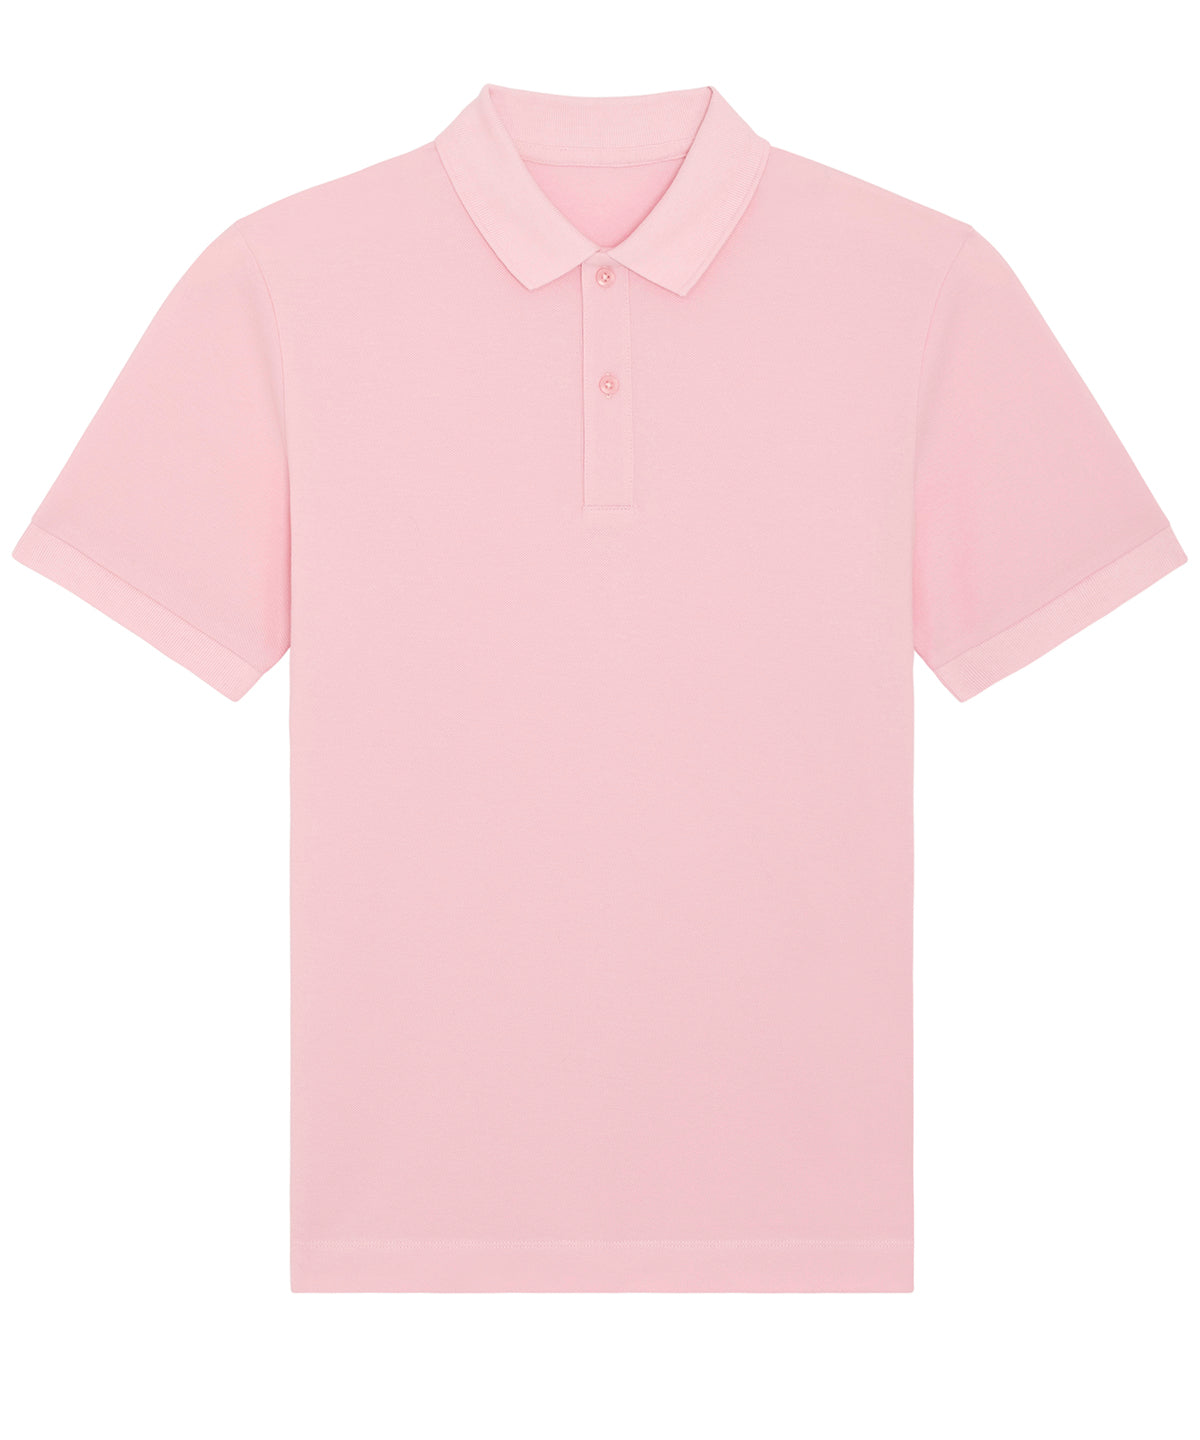 Stanley/Stella Prepster Unisex Short Sleeve Polo Cotton Pink